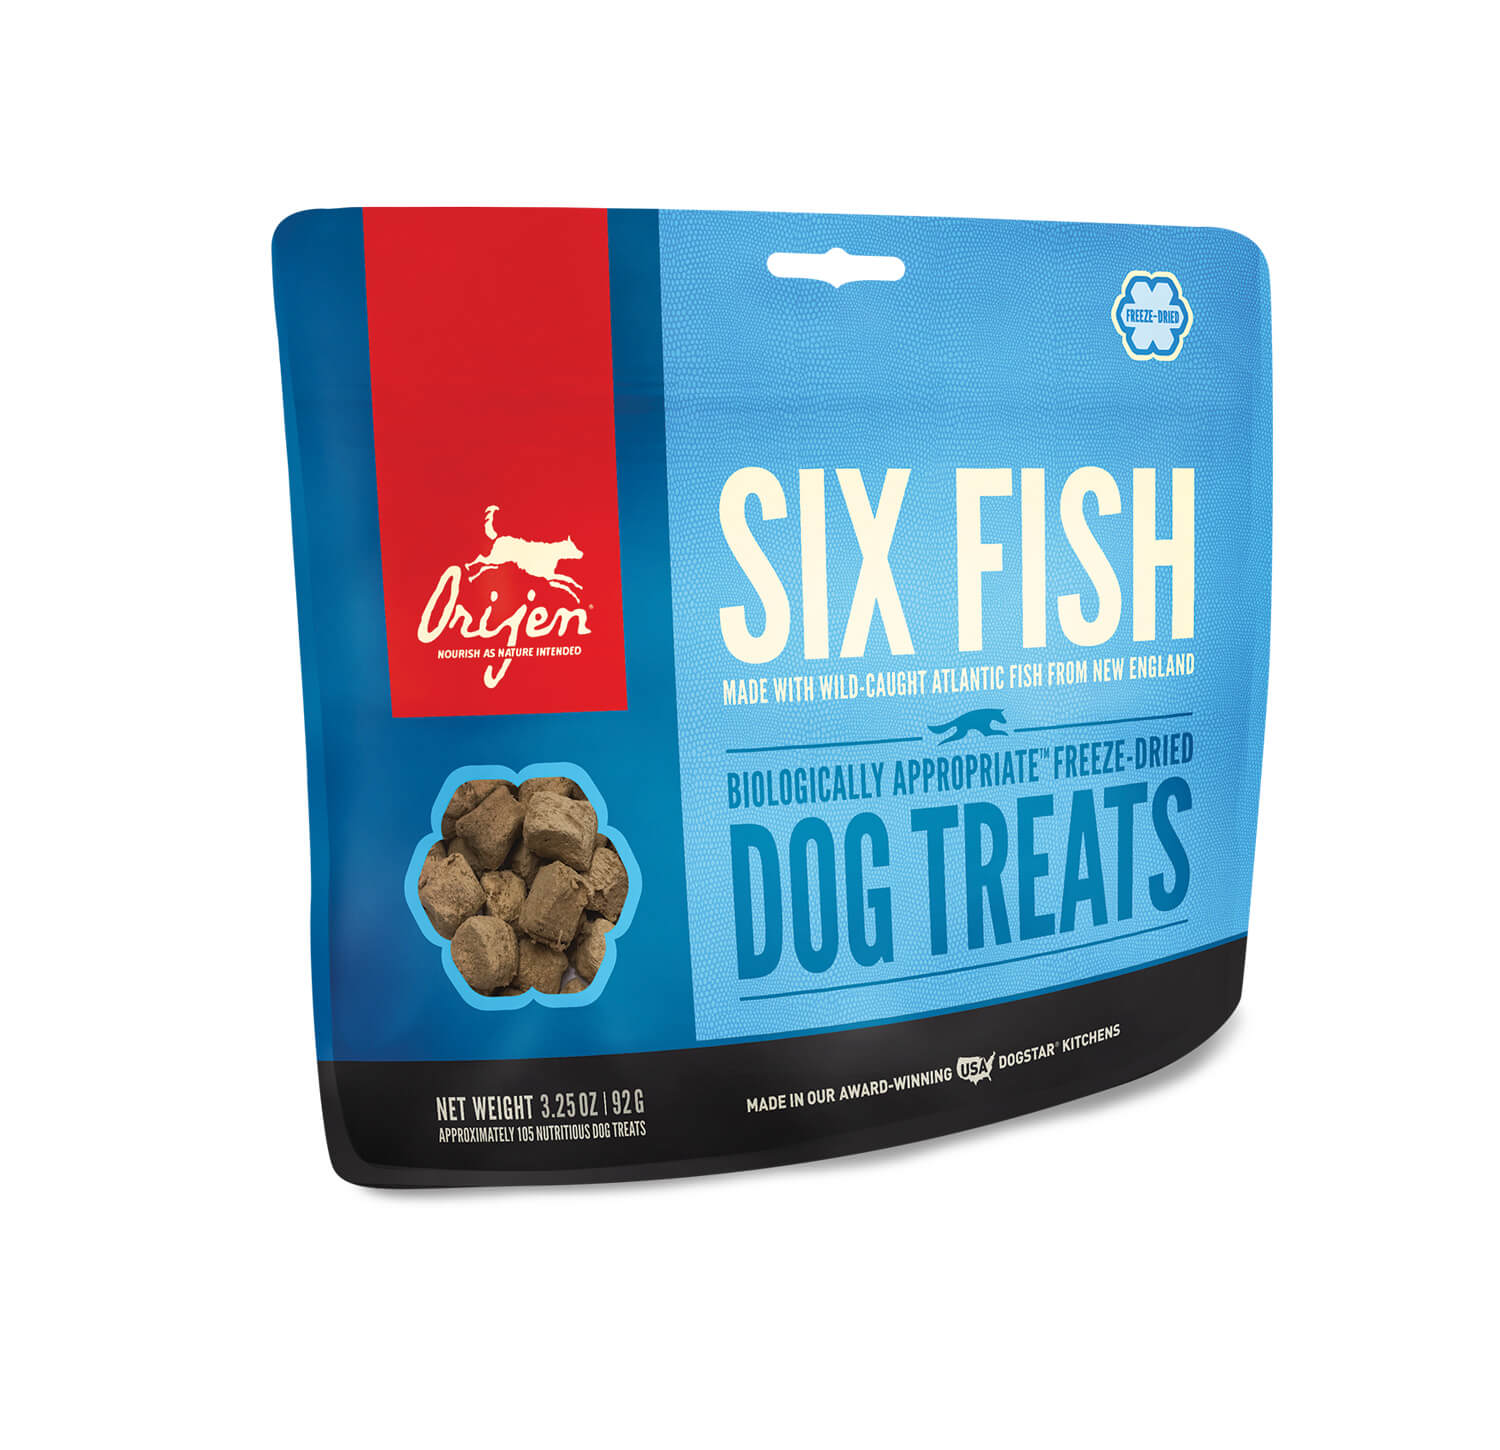 Orijen Dog Treats - Six Fish